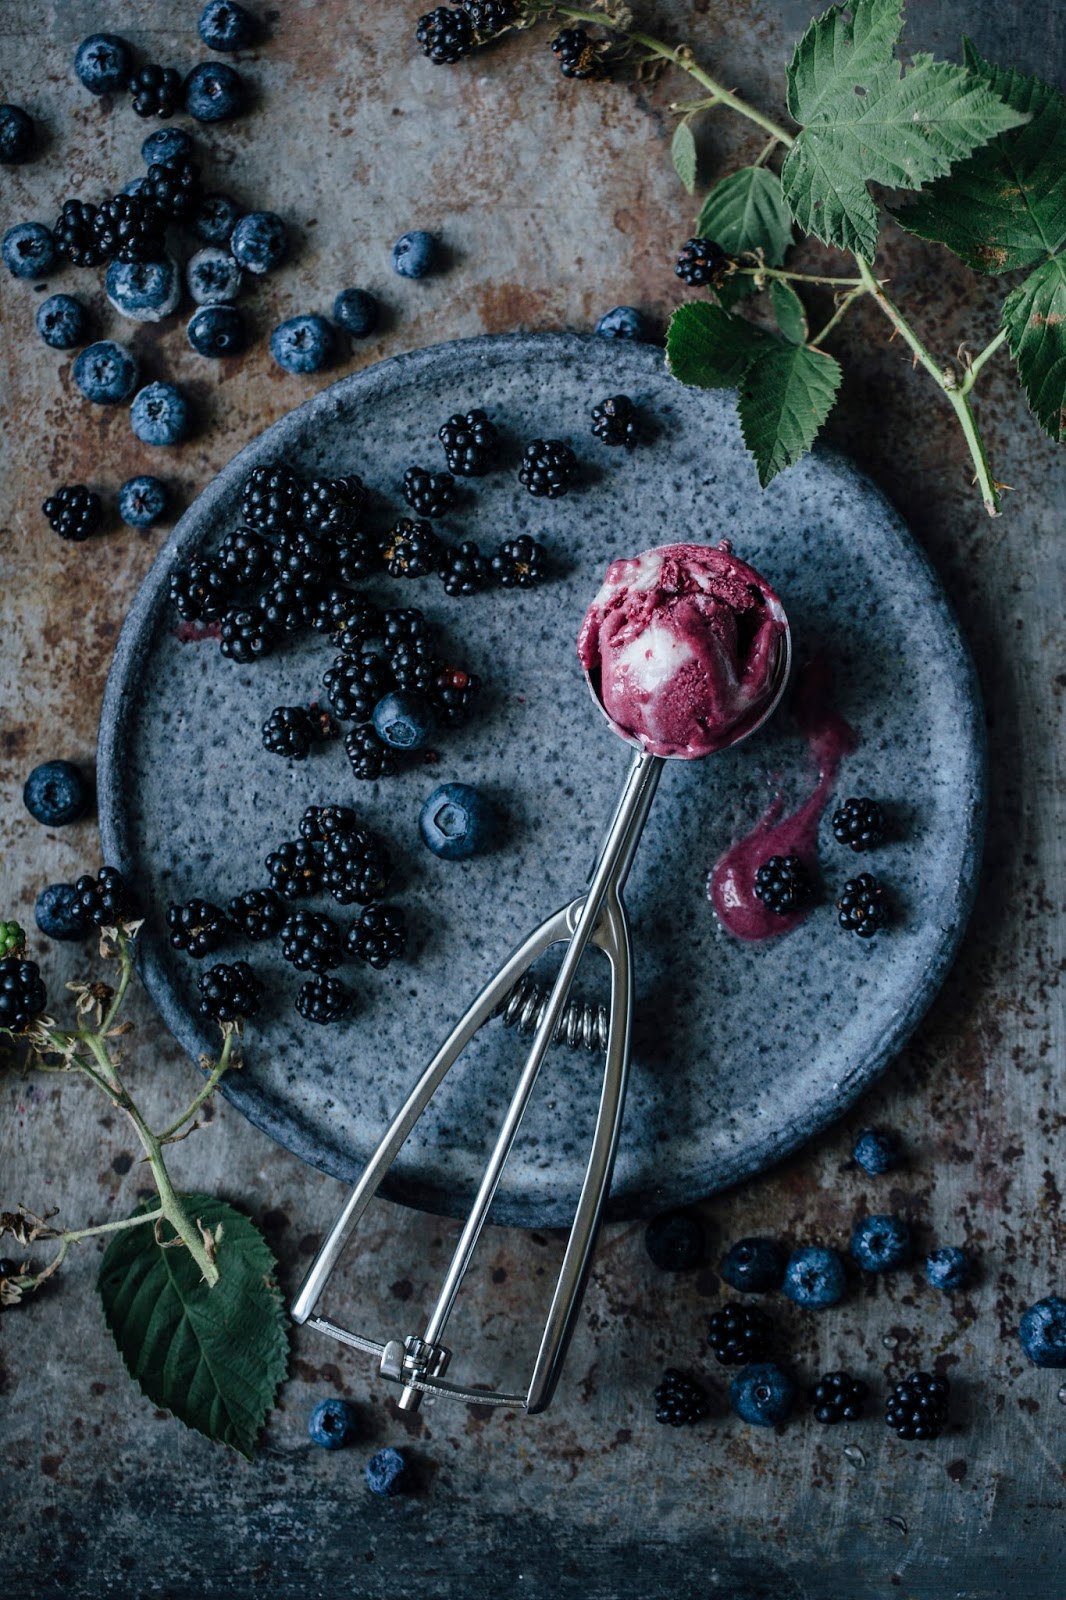 Blackberry-Blueberry Ice-Cream with Banana Meringue Swirls